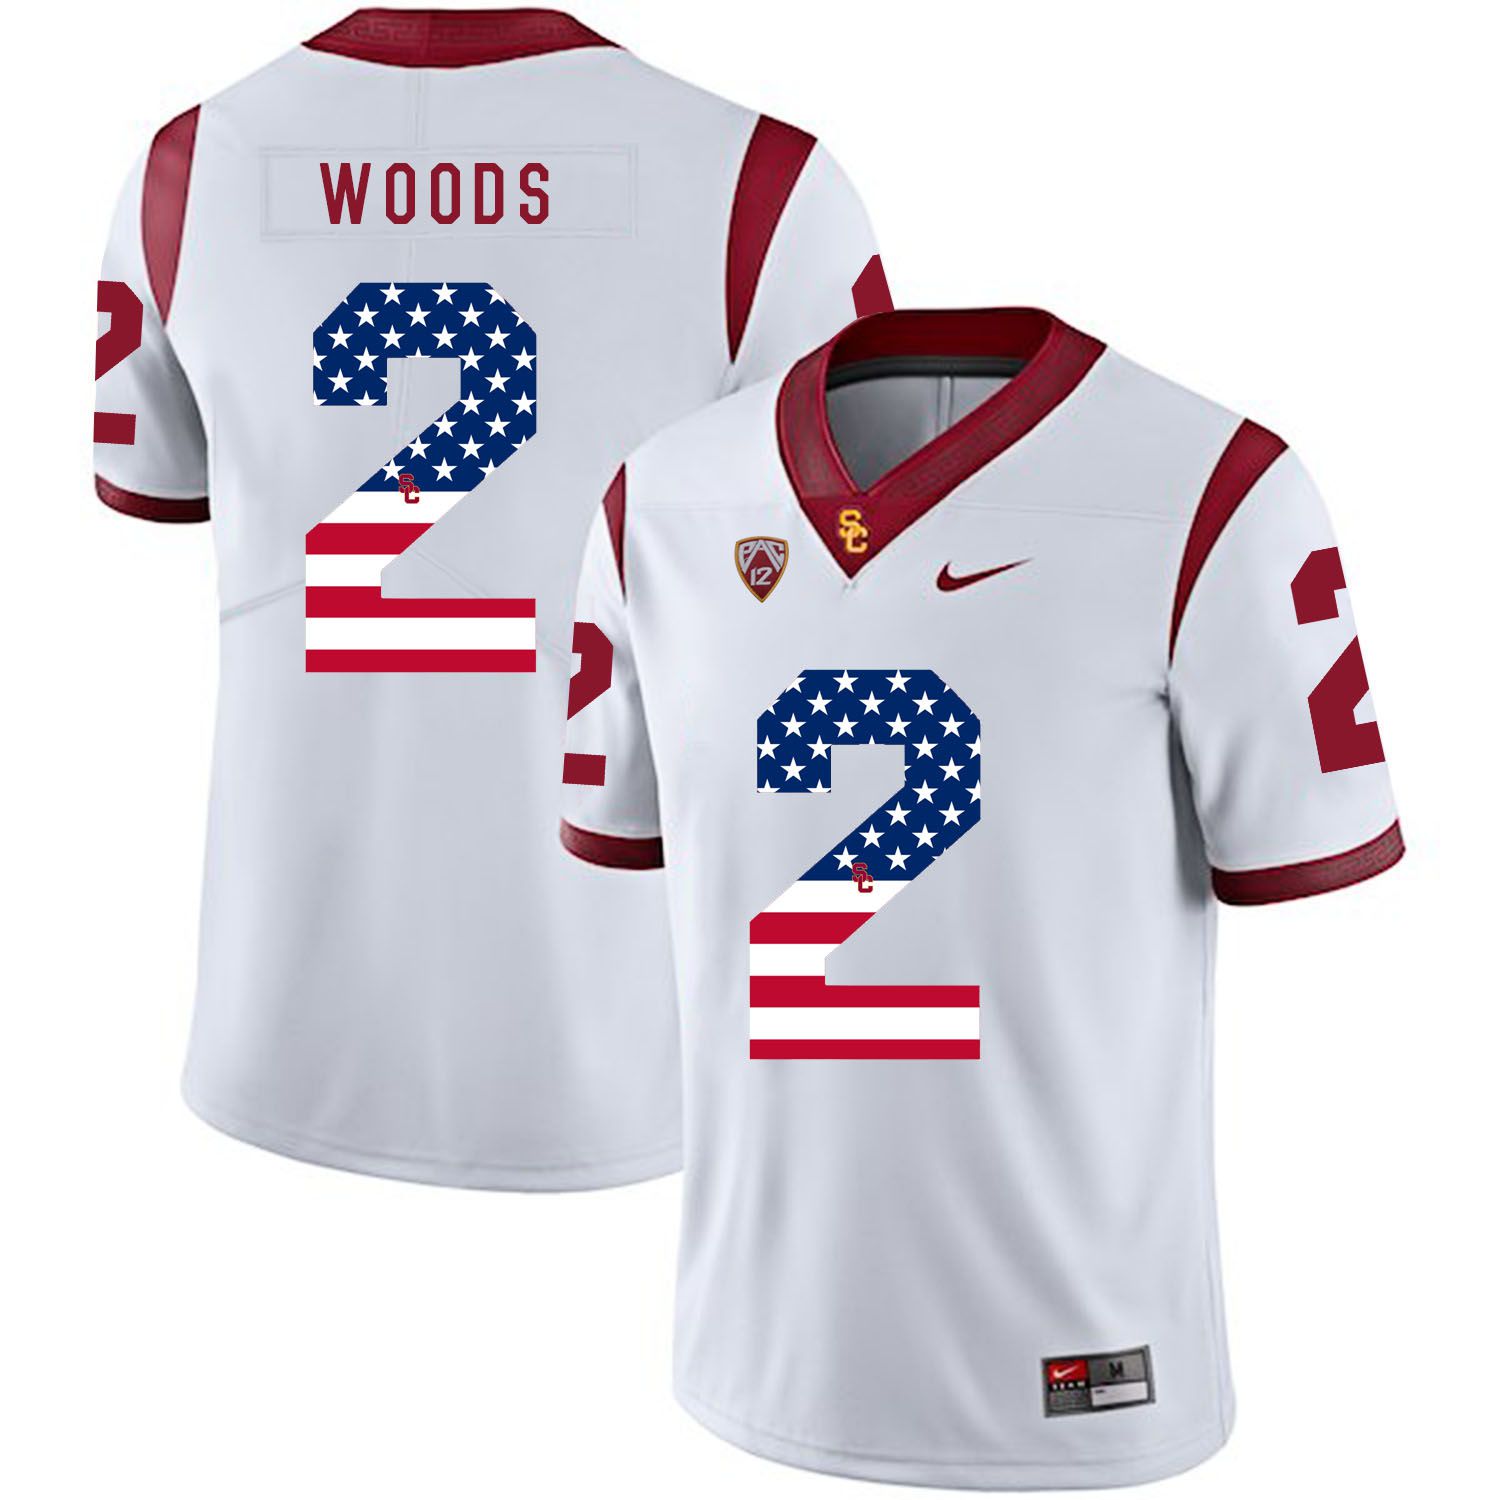 Men USC Trojans #2 Woods White Flag Customized NCAA Jerseys